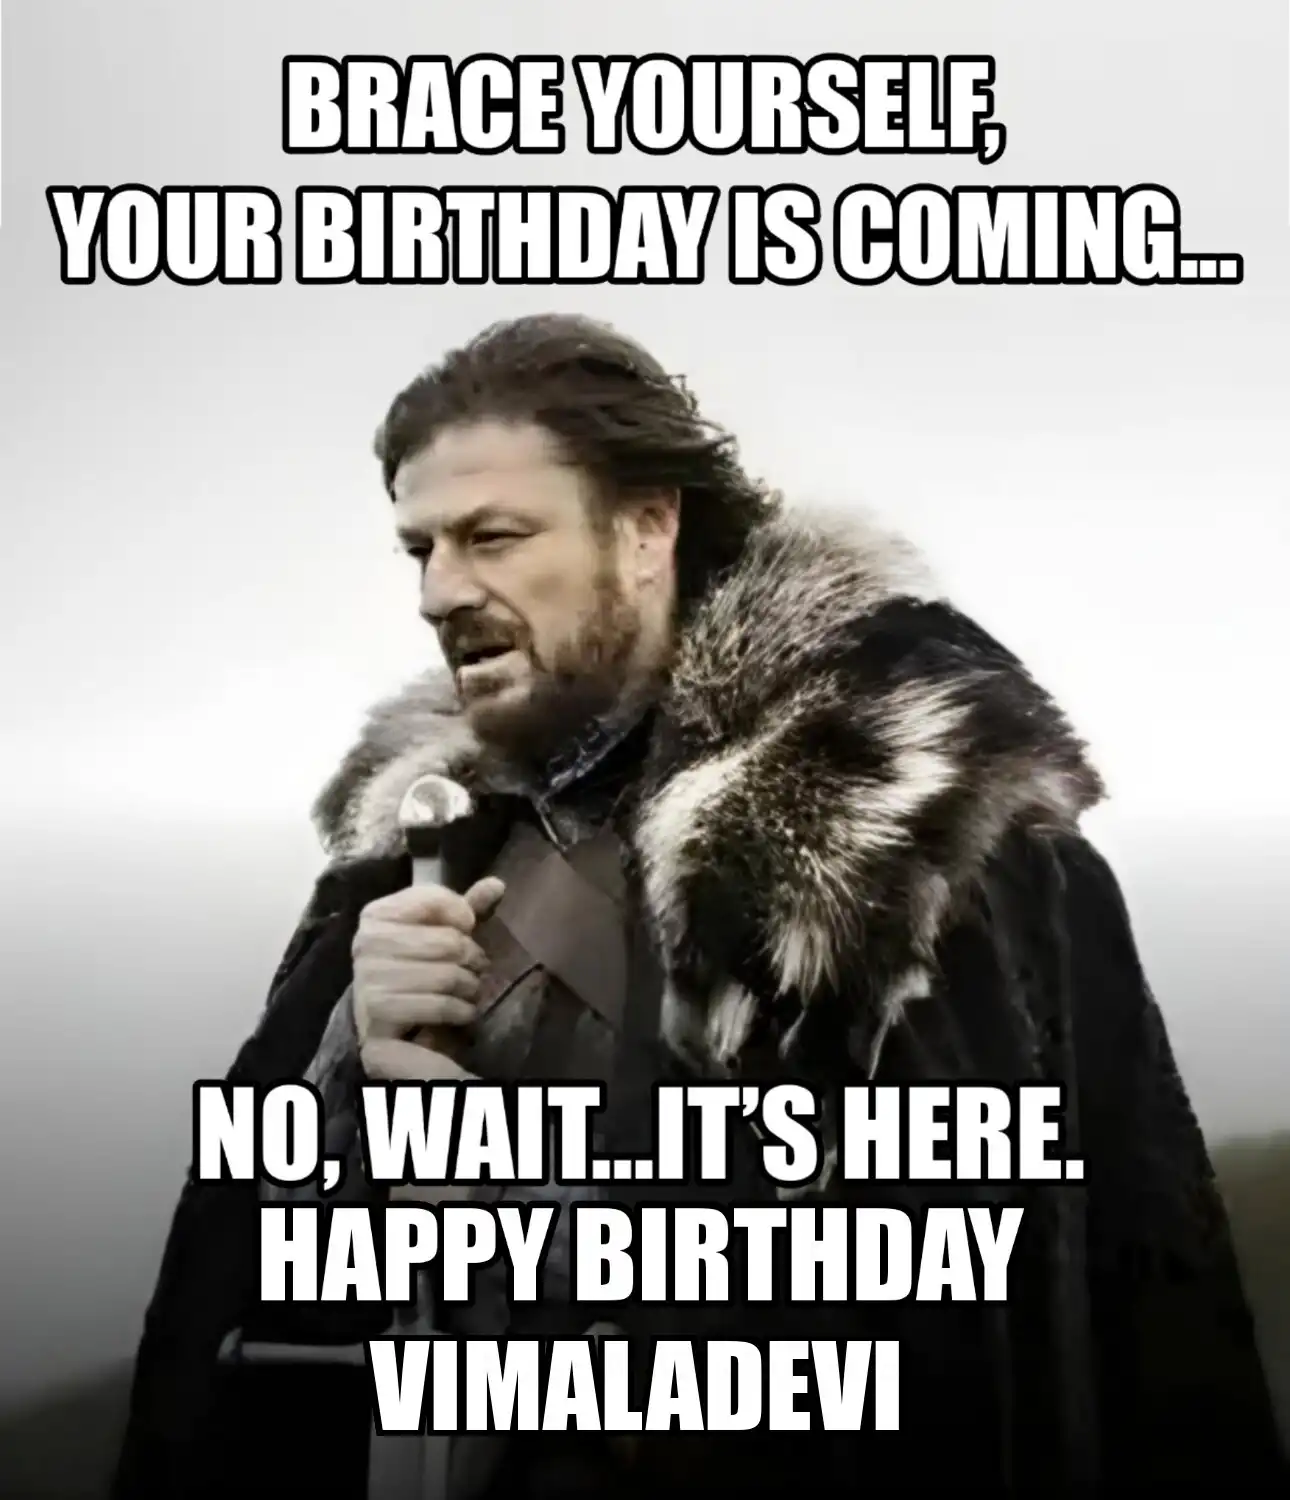 Happy Birthday Vimaladevi Brace Yourself Your Birthday Is Coming Meme